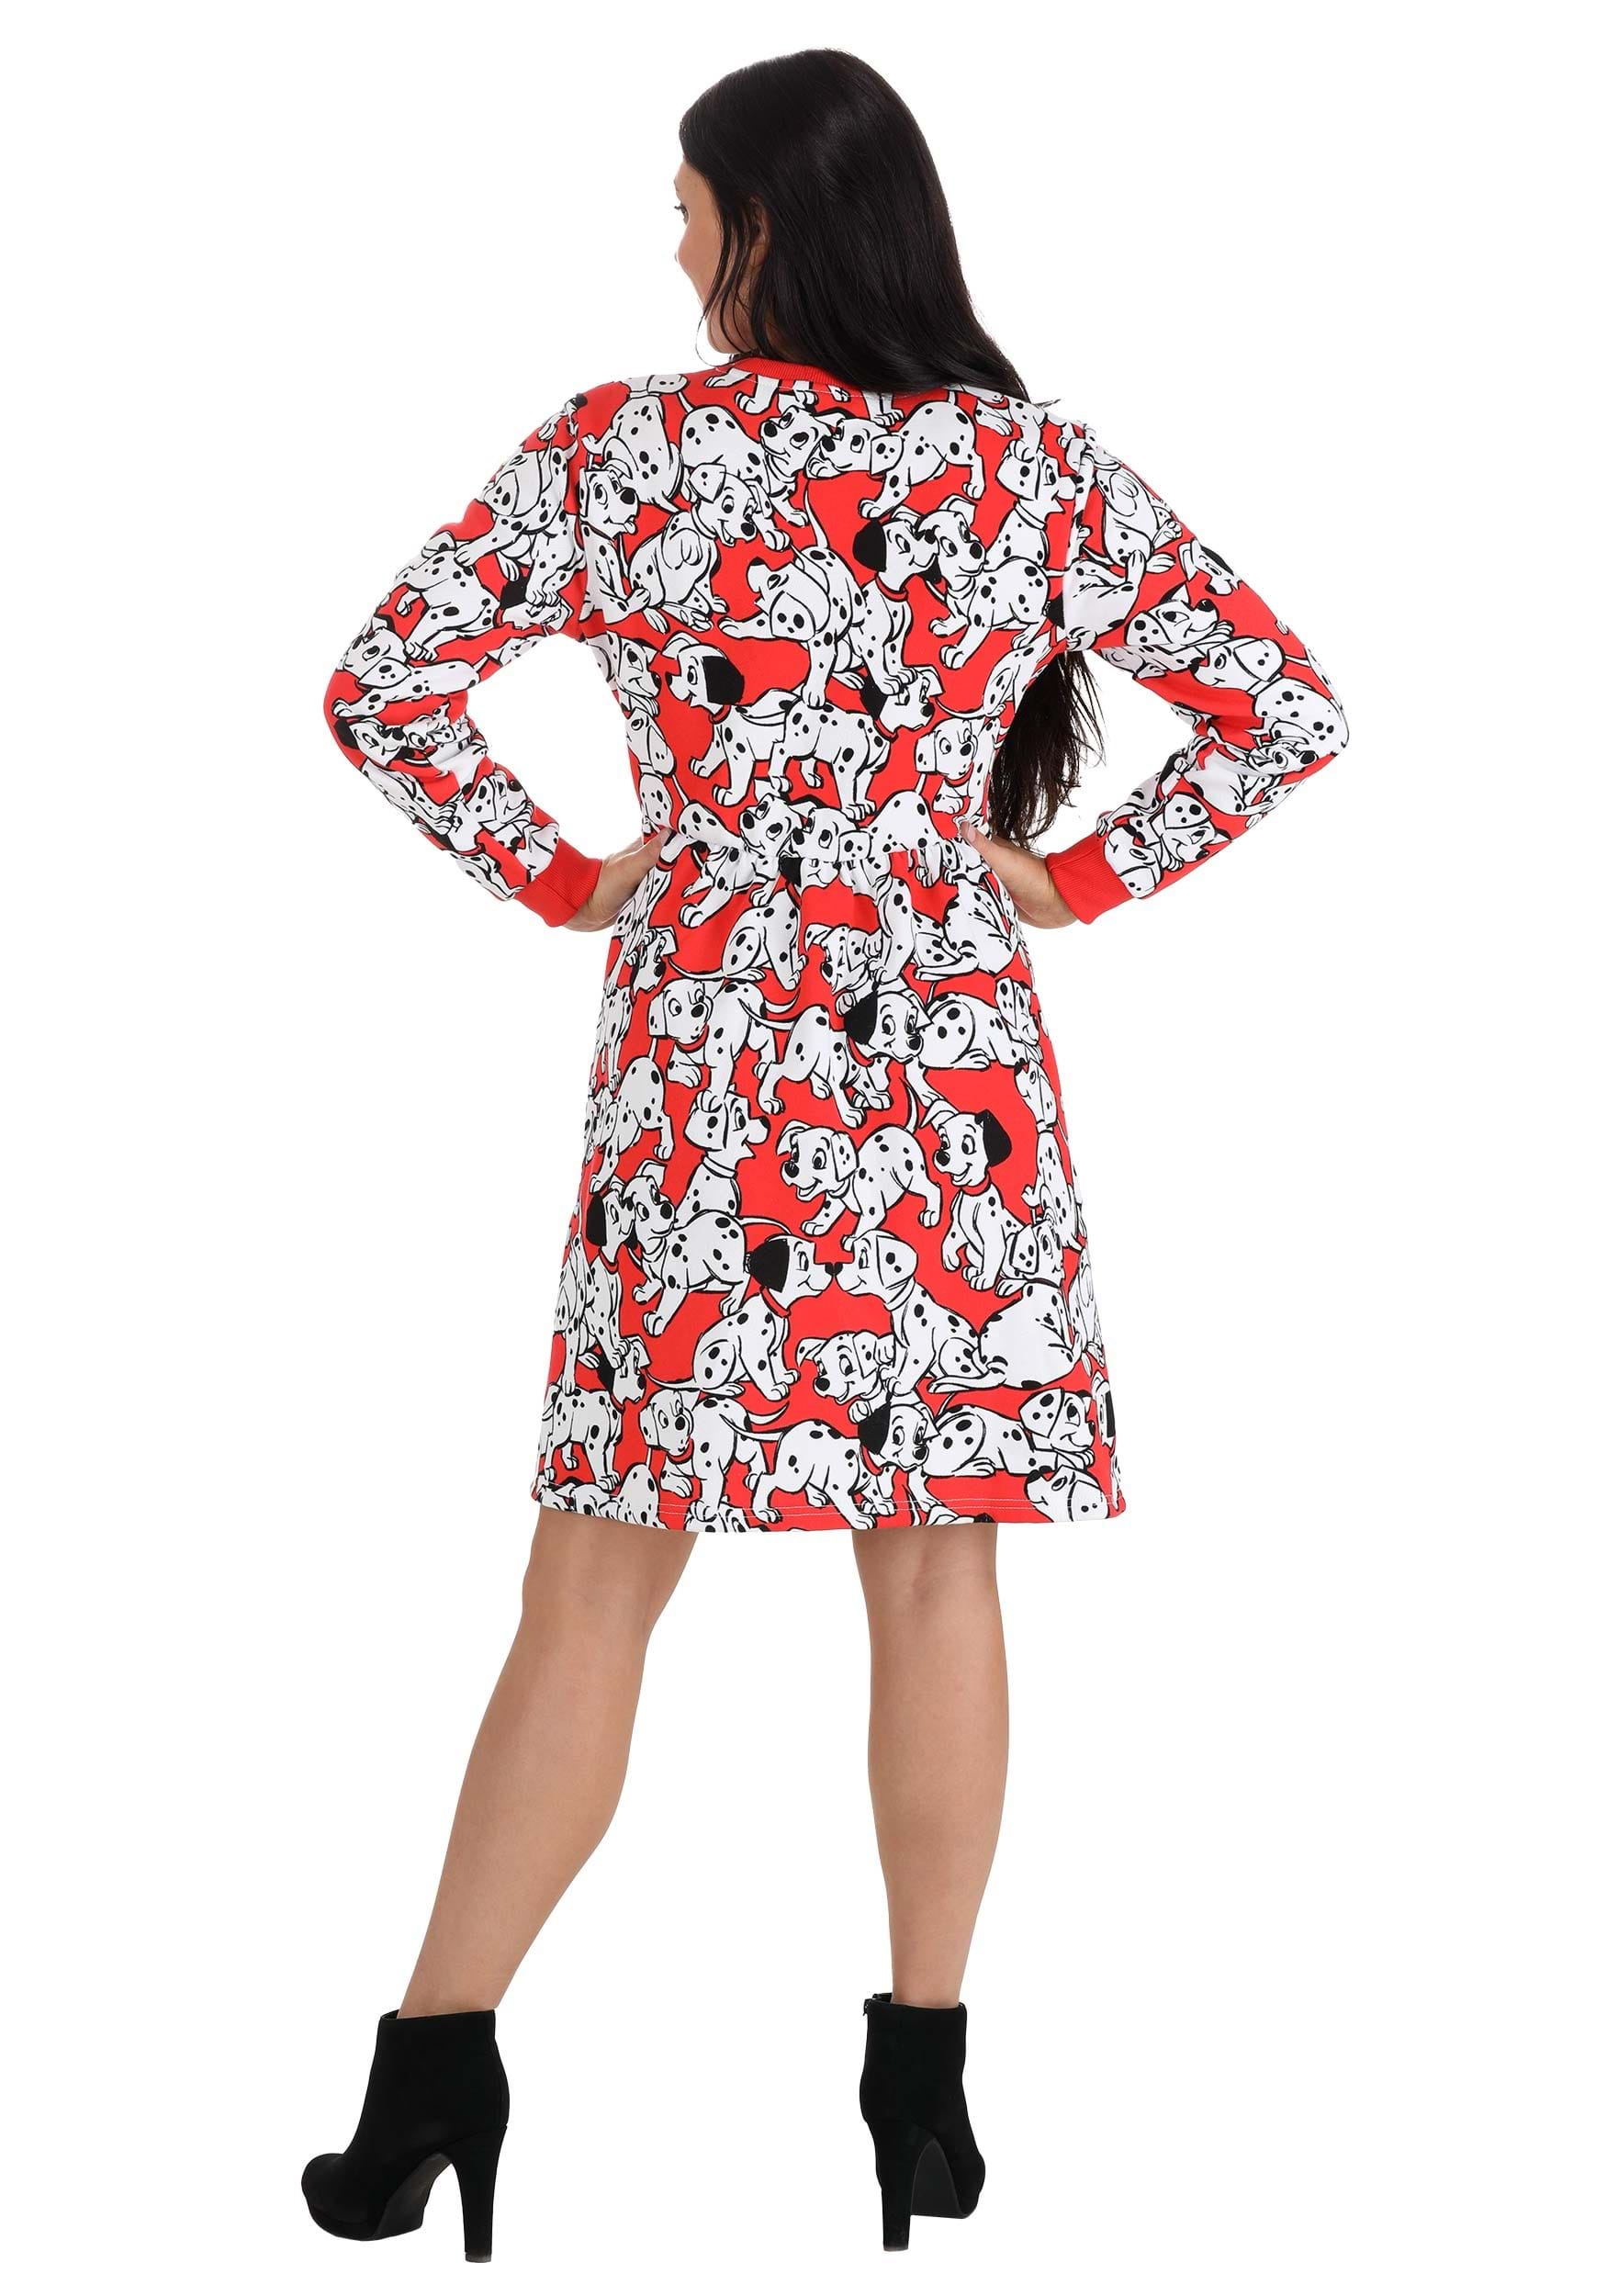 Cakeworthy Women's 101 Dalmatians Sweater Dress